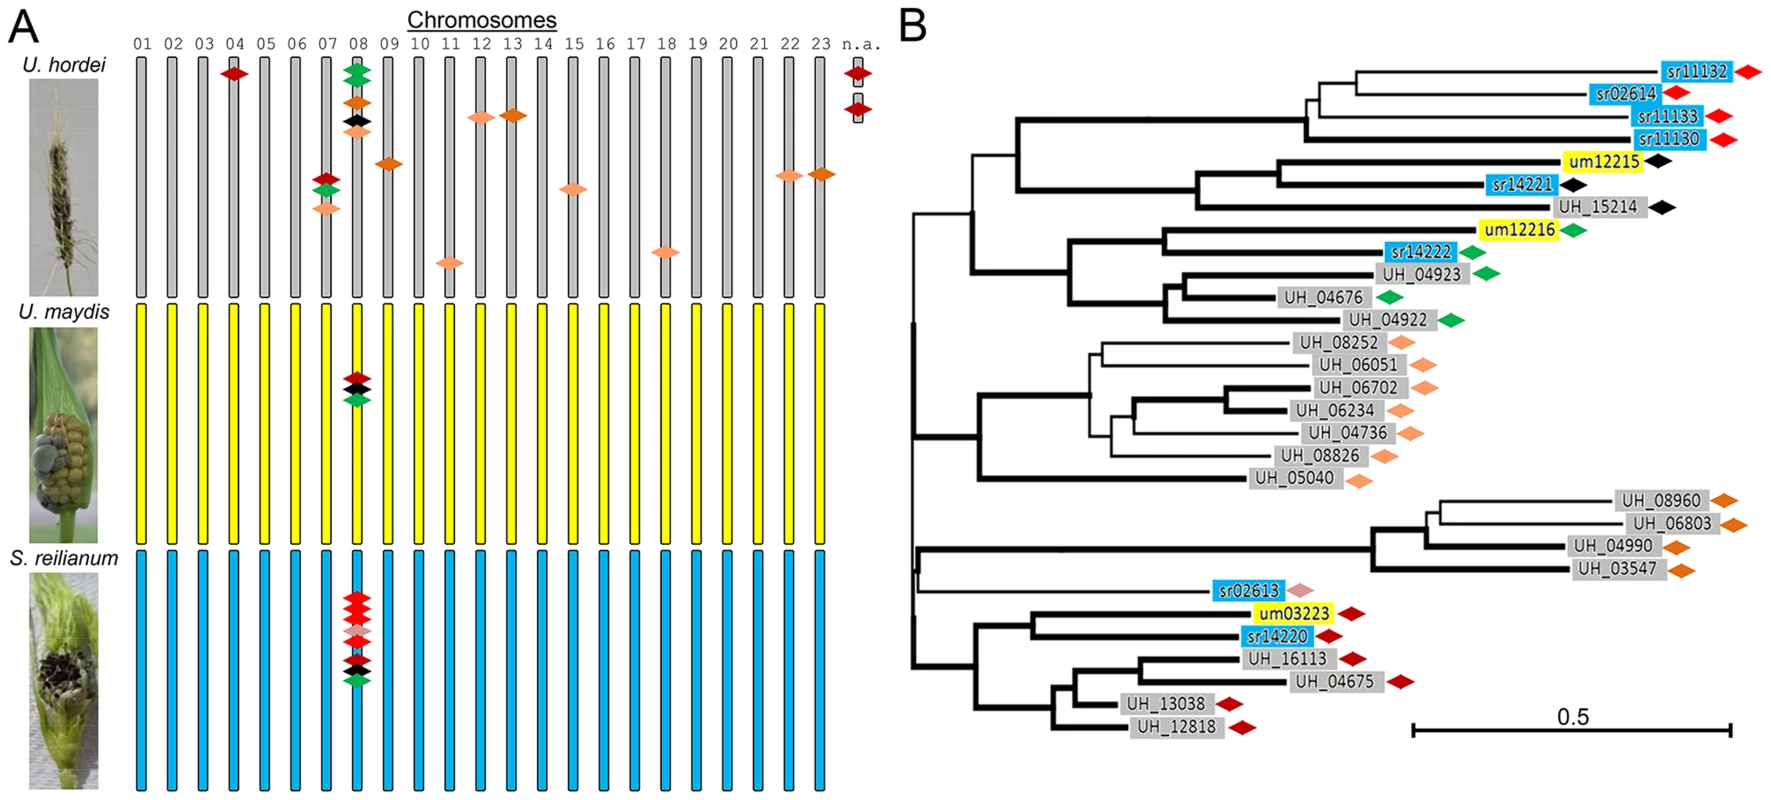 Overview of <i>mig1</i>-related genes in <i>U. hordei</i>, <i>U. maydis</i>, and <i>S. reilianum</i>.